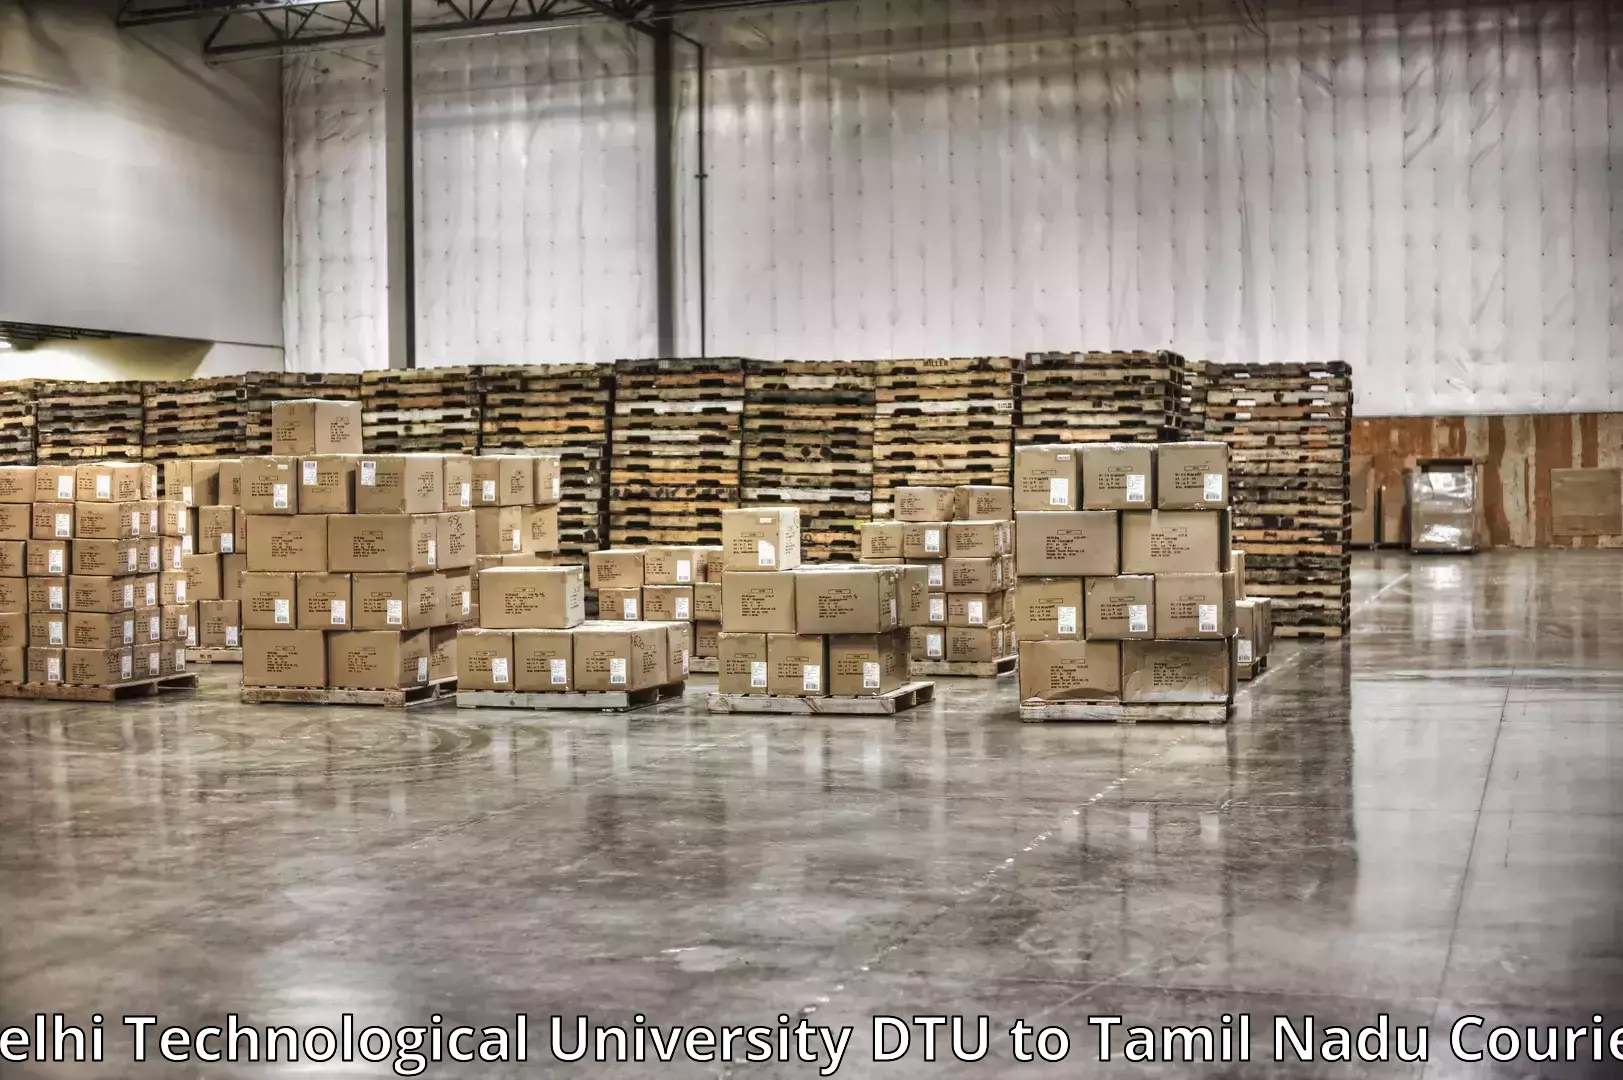 Door-to-door relocation services Delhi Technological University DTU to Chennai Port